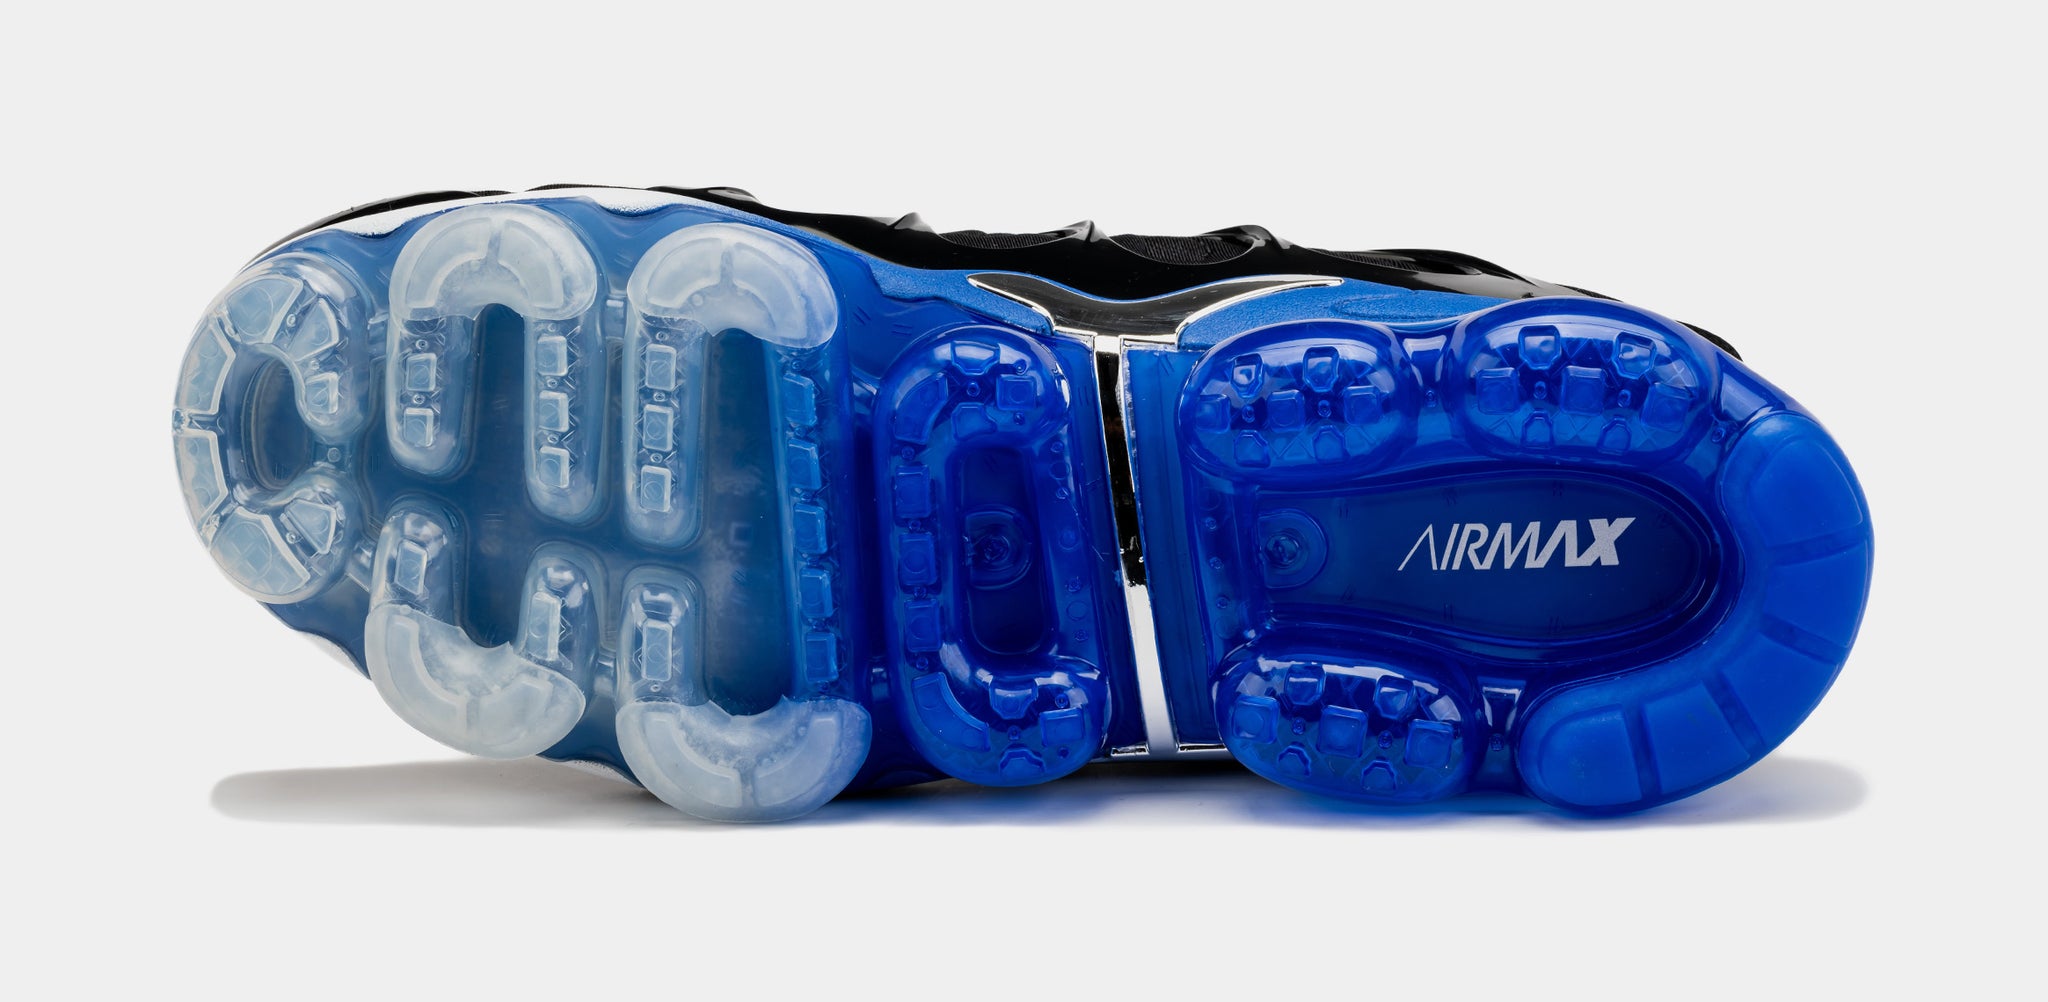 Nike Air VaporMax Plus Photo Blue Running Shoes